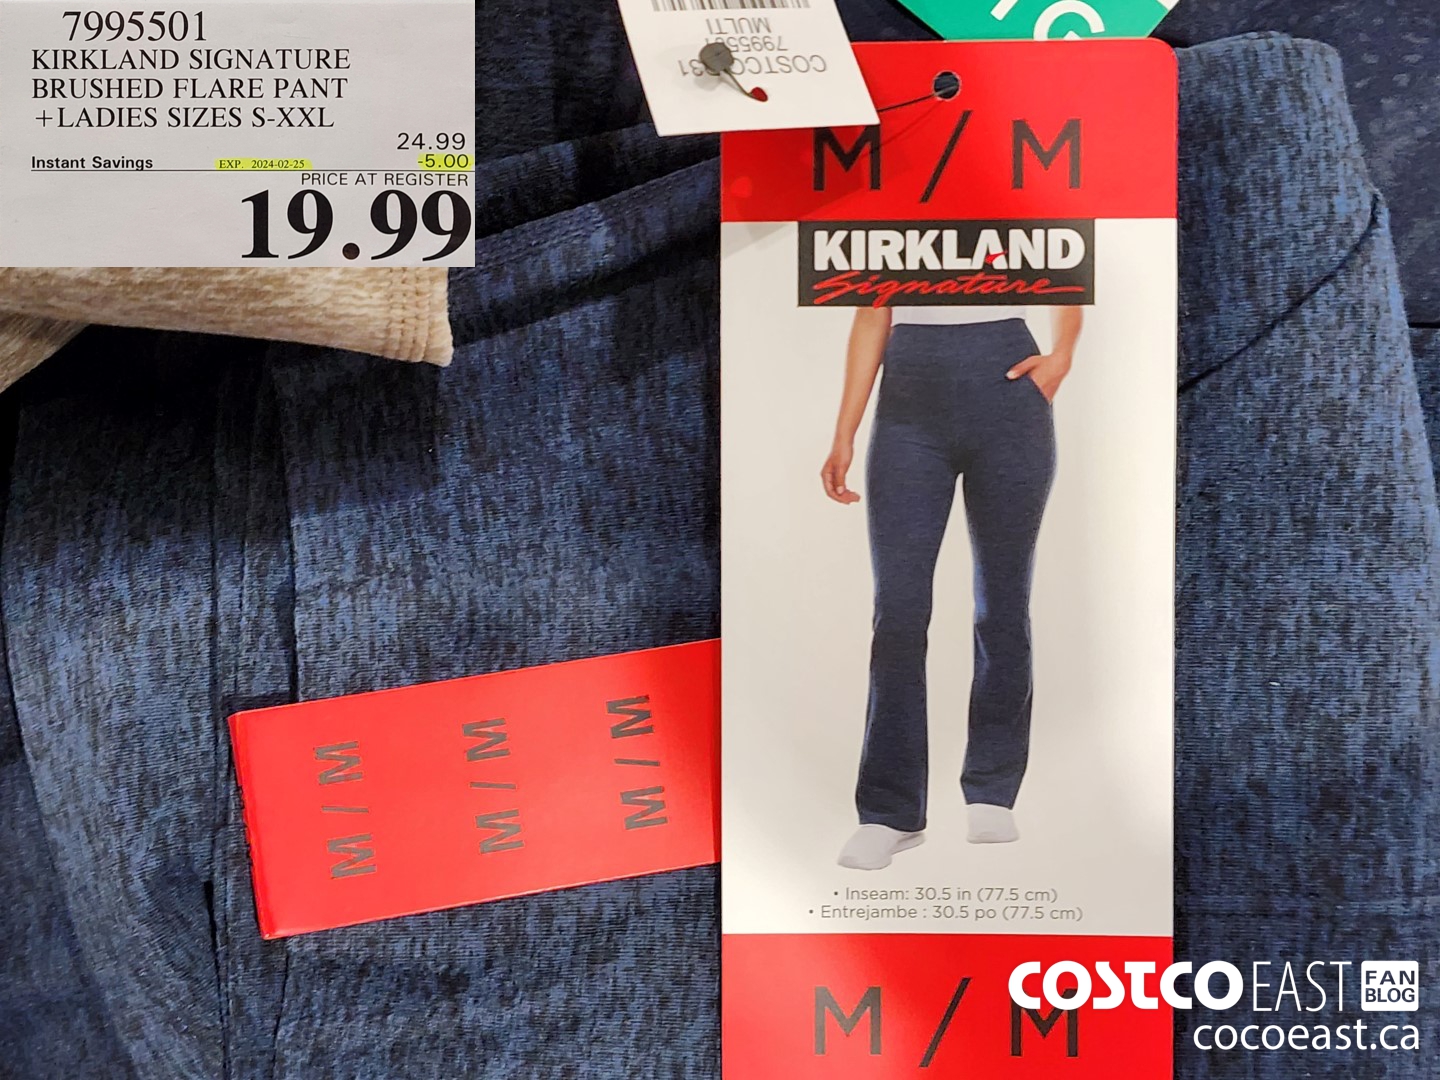 Costco Buys on Instagram: These Kirkland signature ladies brushed